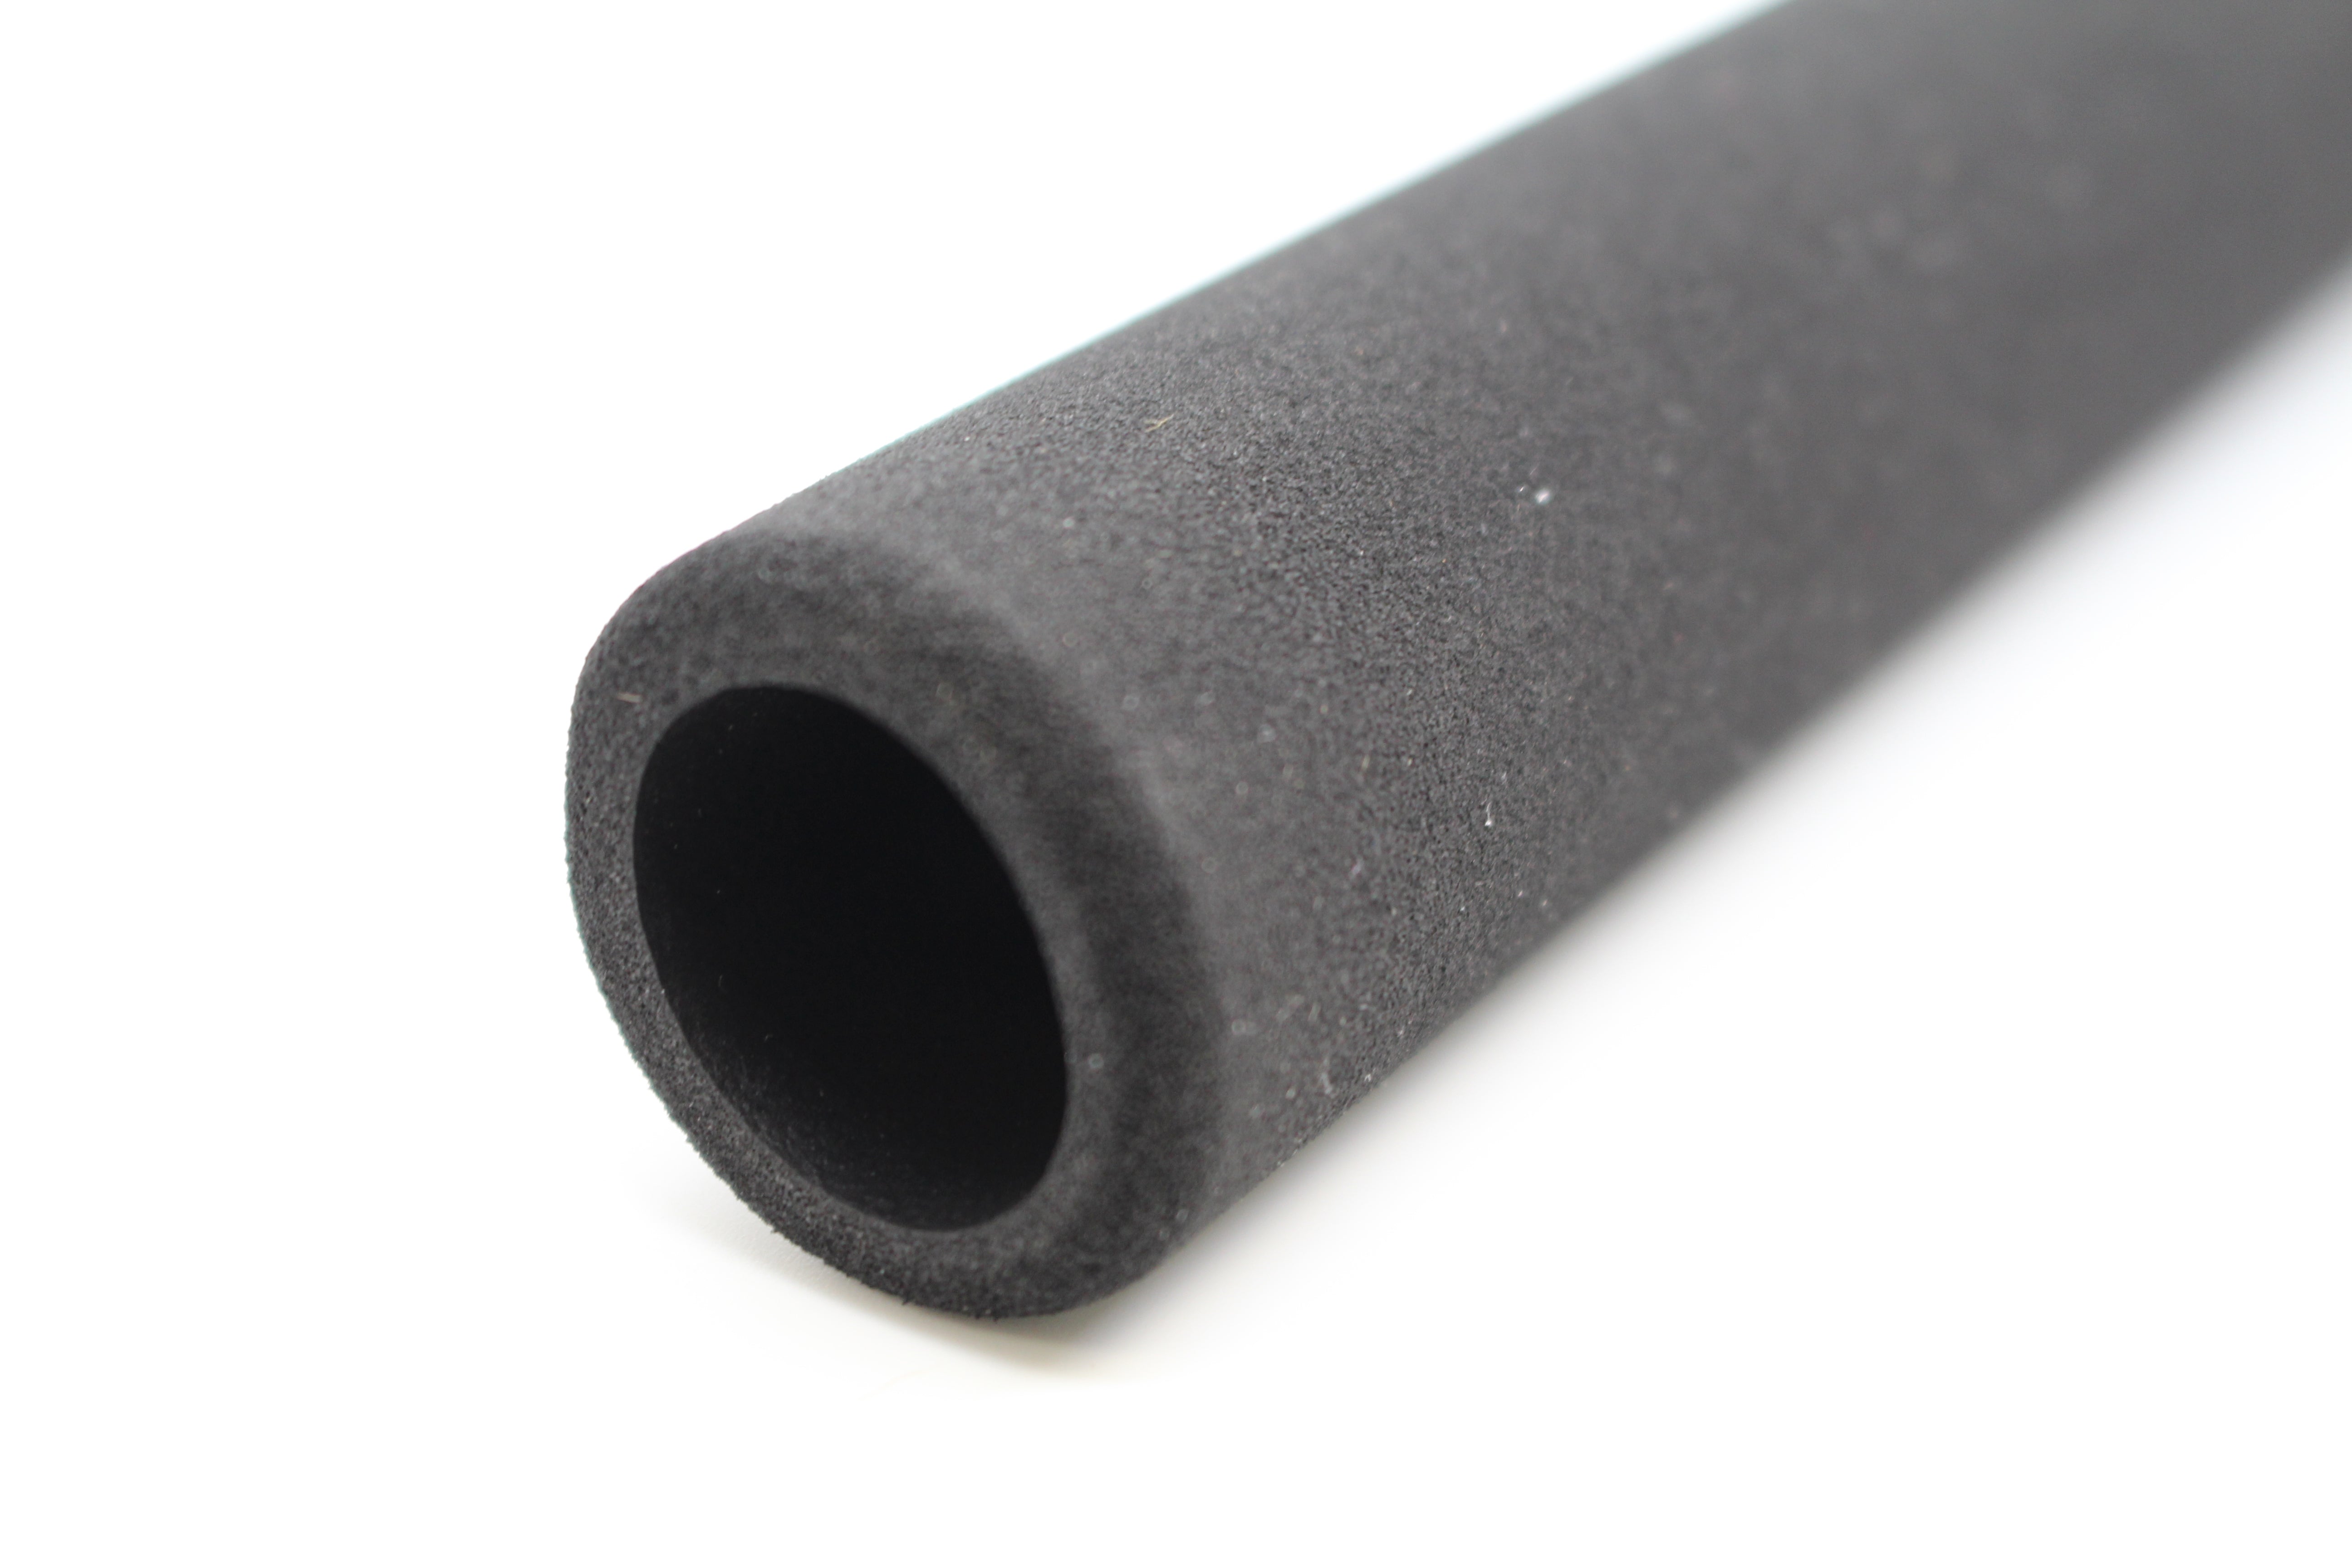 Soft Foam Grip - 12”L. Fits 1-1/8” thru 1” Tube/Rod(Each)